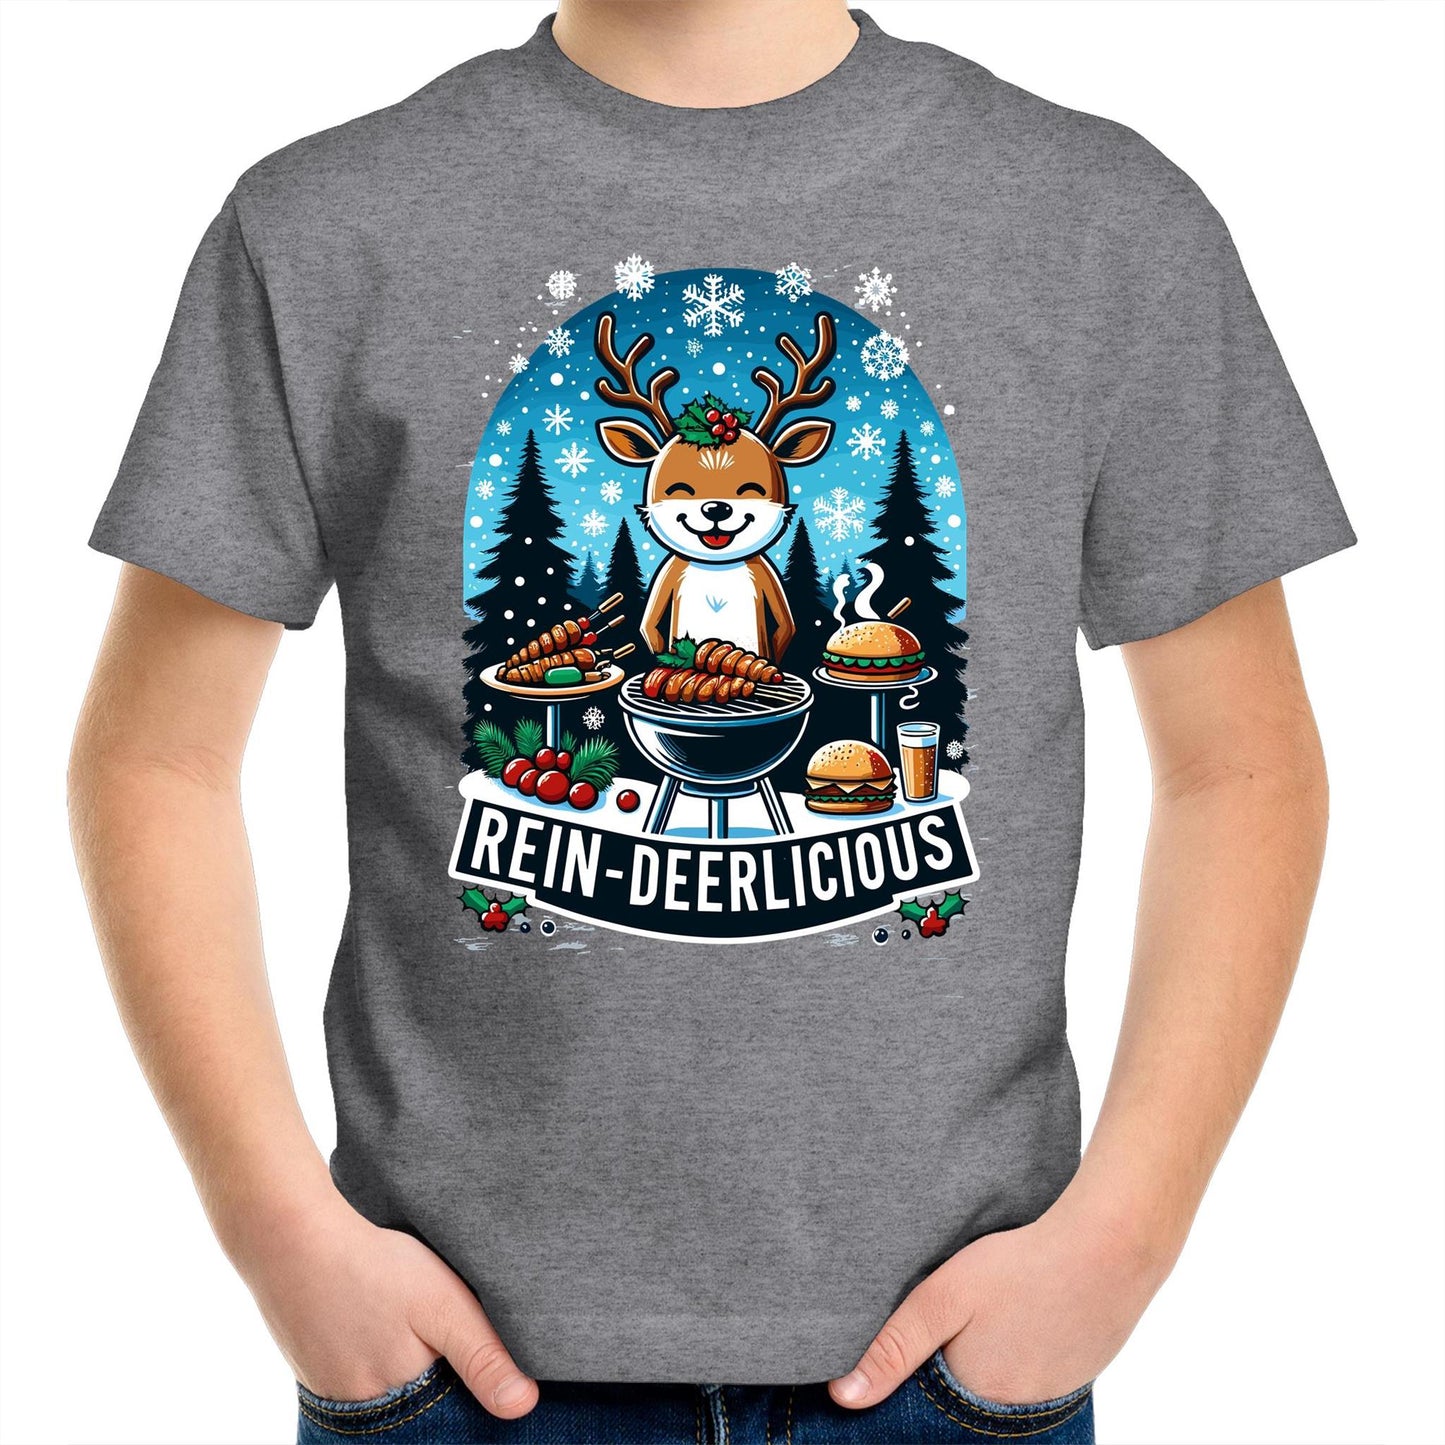 Reindeer-licious Kids Youth T-Shirt